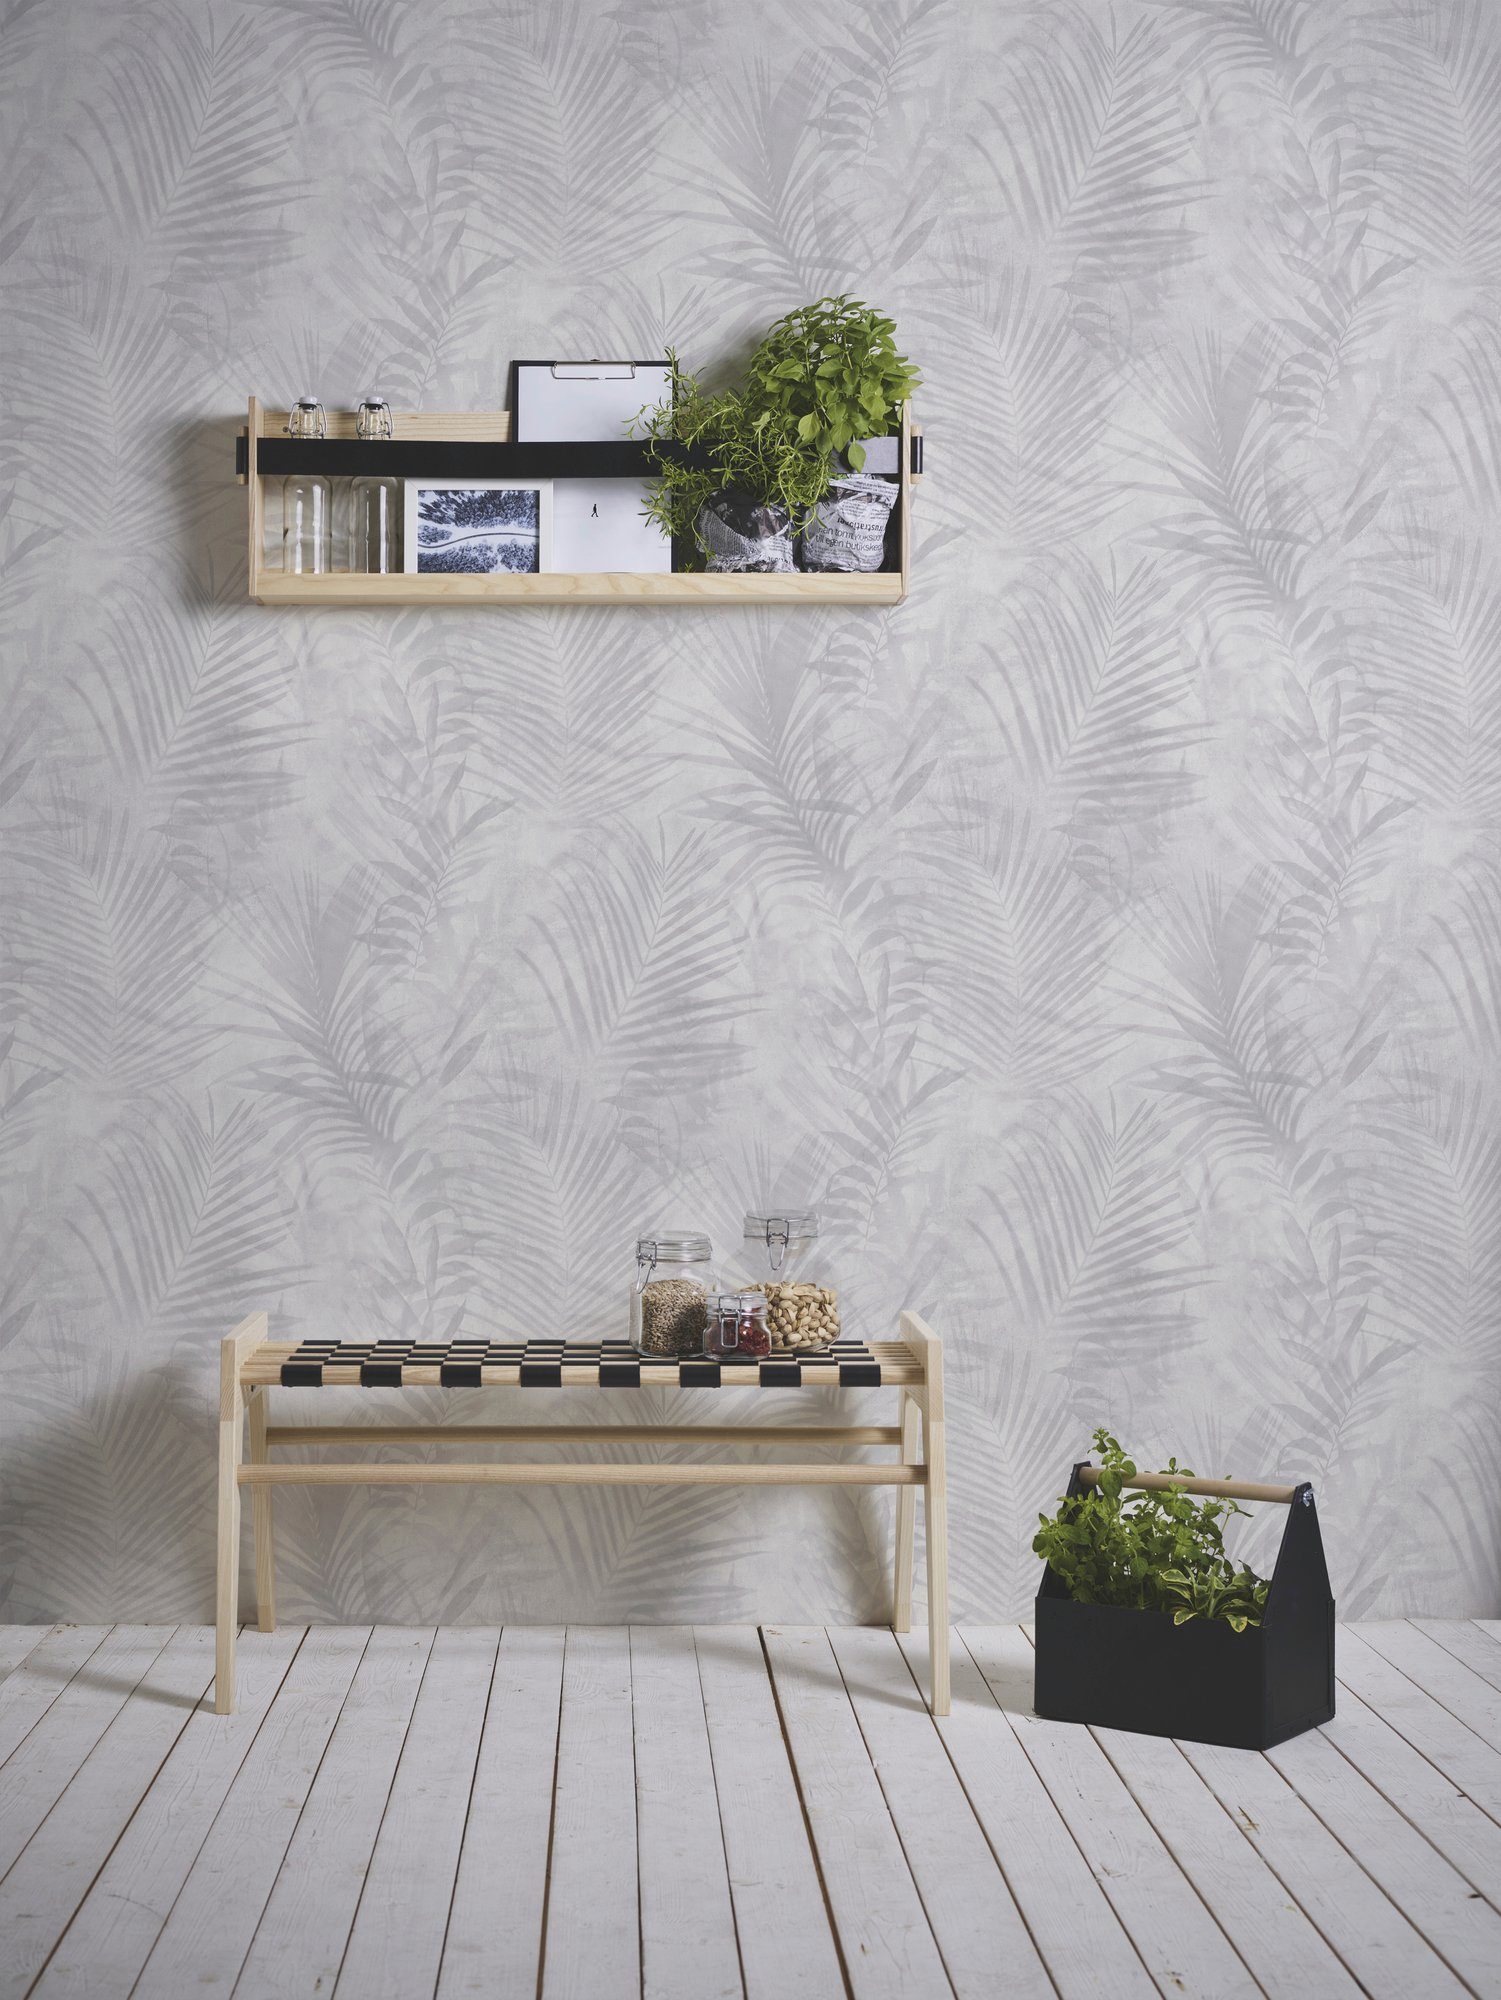 A.S. Création Neue Concret Vliestapete mit Tapete Dschungeltapete Palmen Palmenblättern, weiß Tropical Bude floral, 2.0